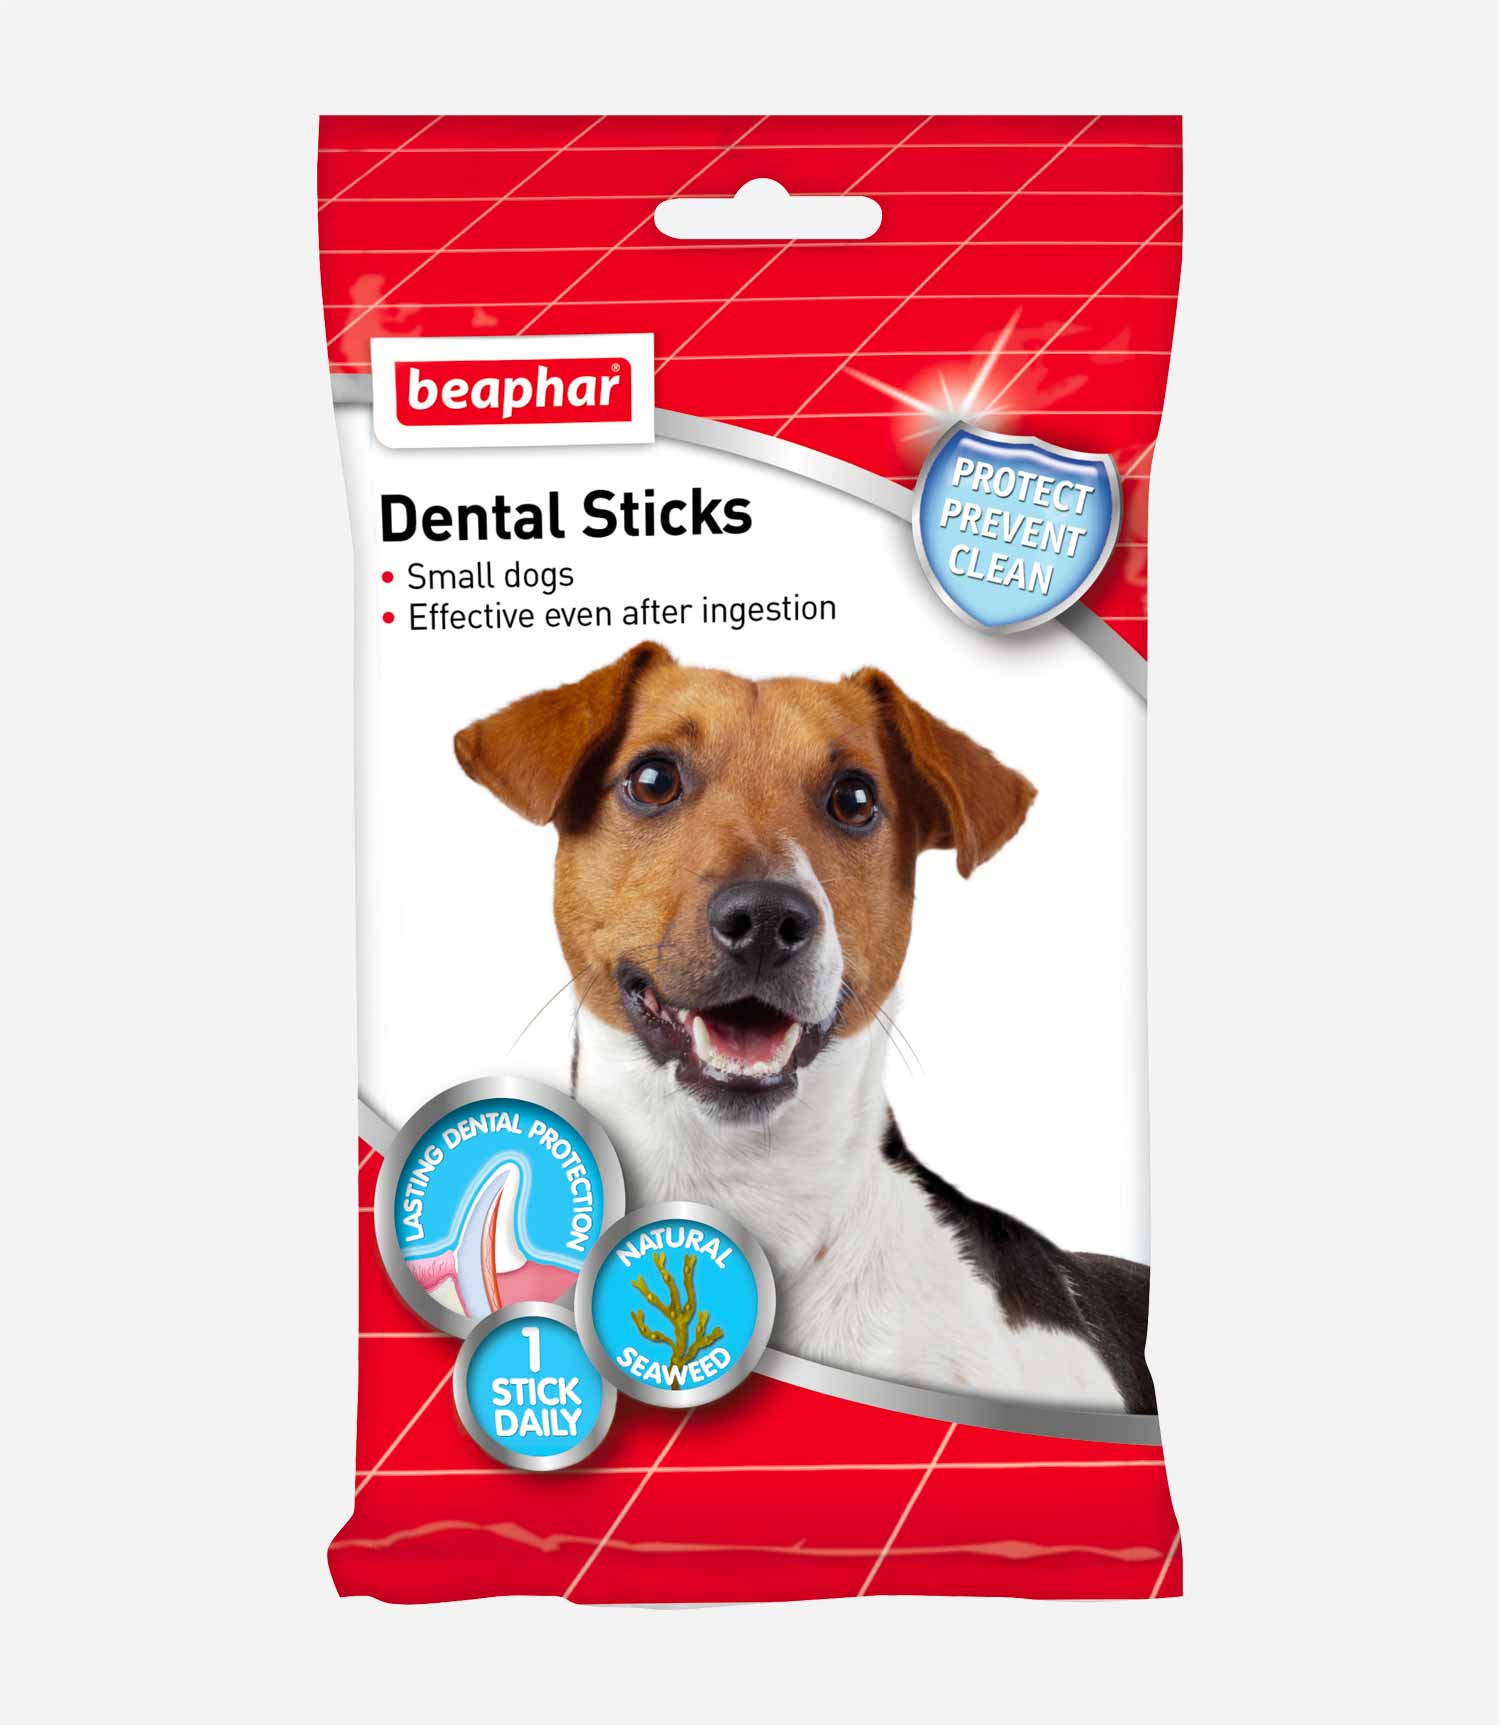 Beaphar Dental Sticks - Nest Pets